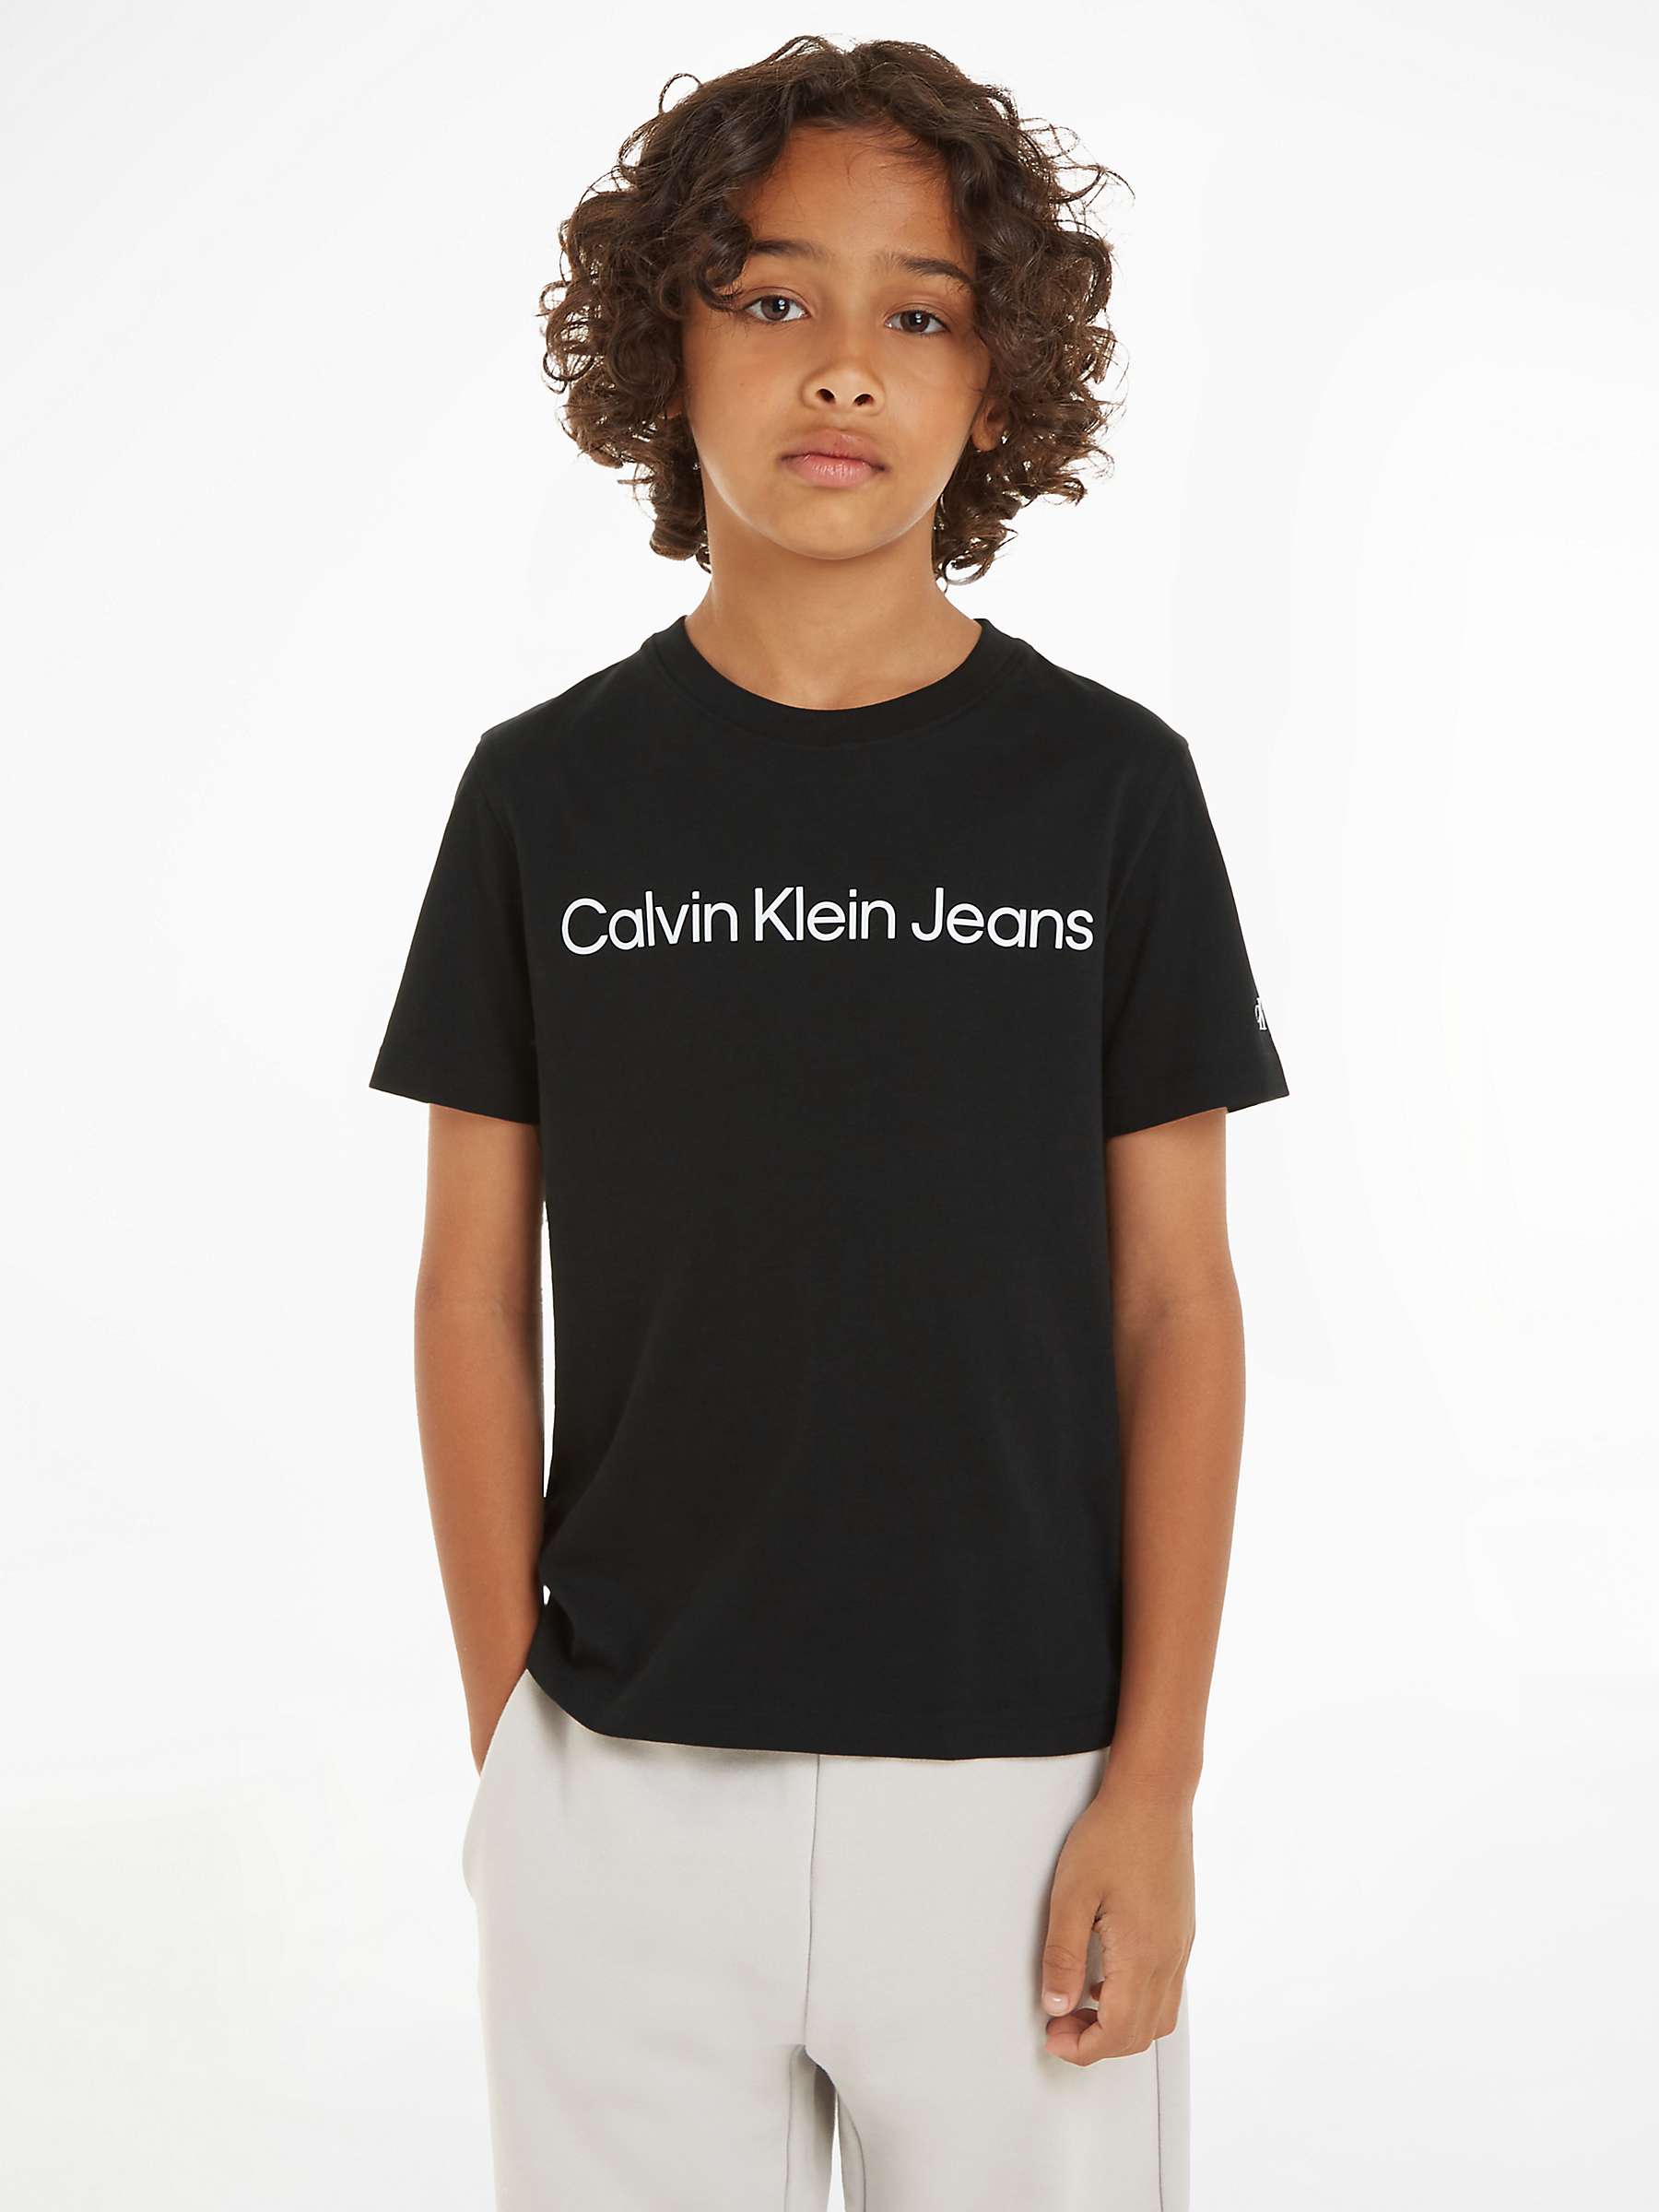 Calvin Klein Institution T Shirt Boys Crew Neck Tee Top Short Sleeve Winter